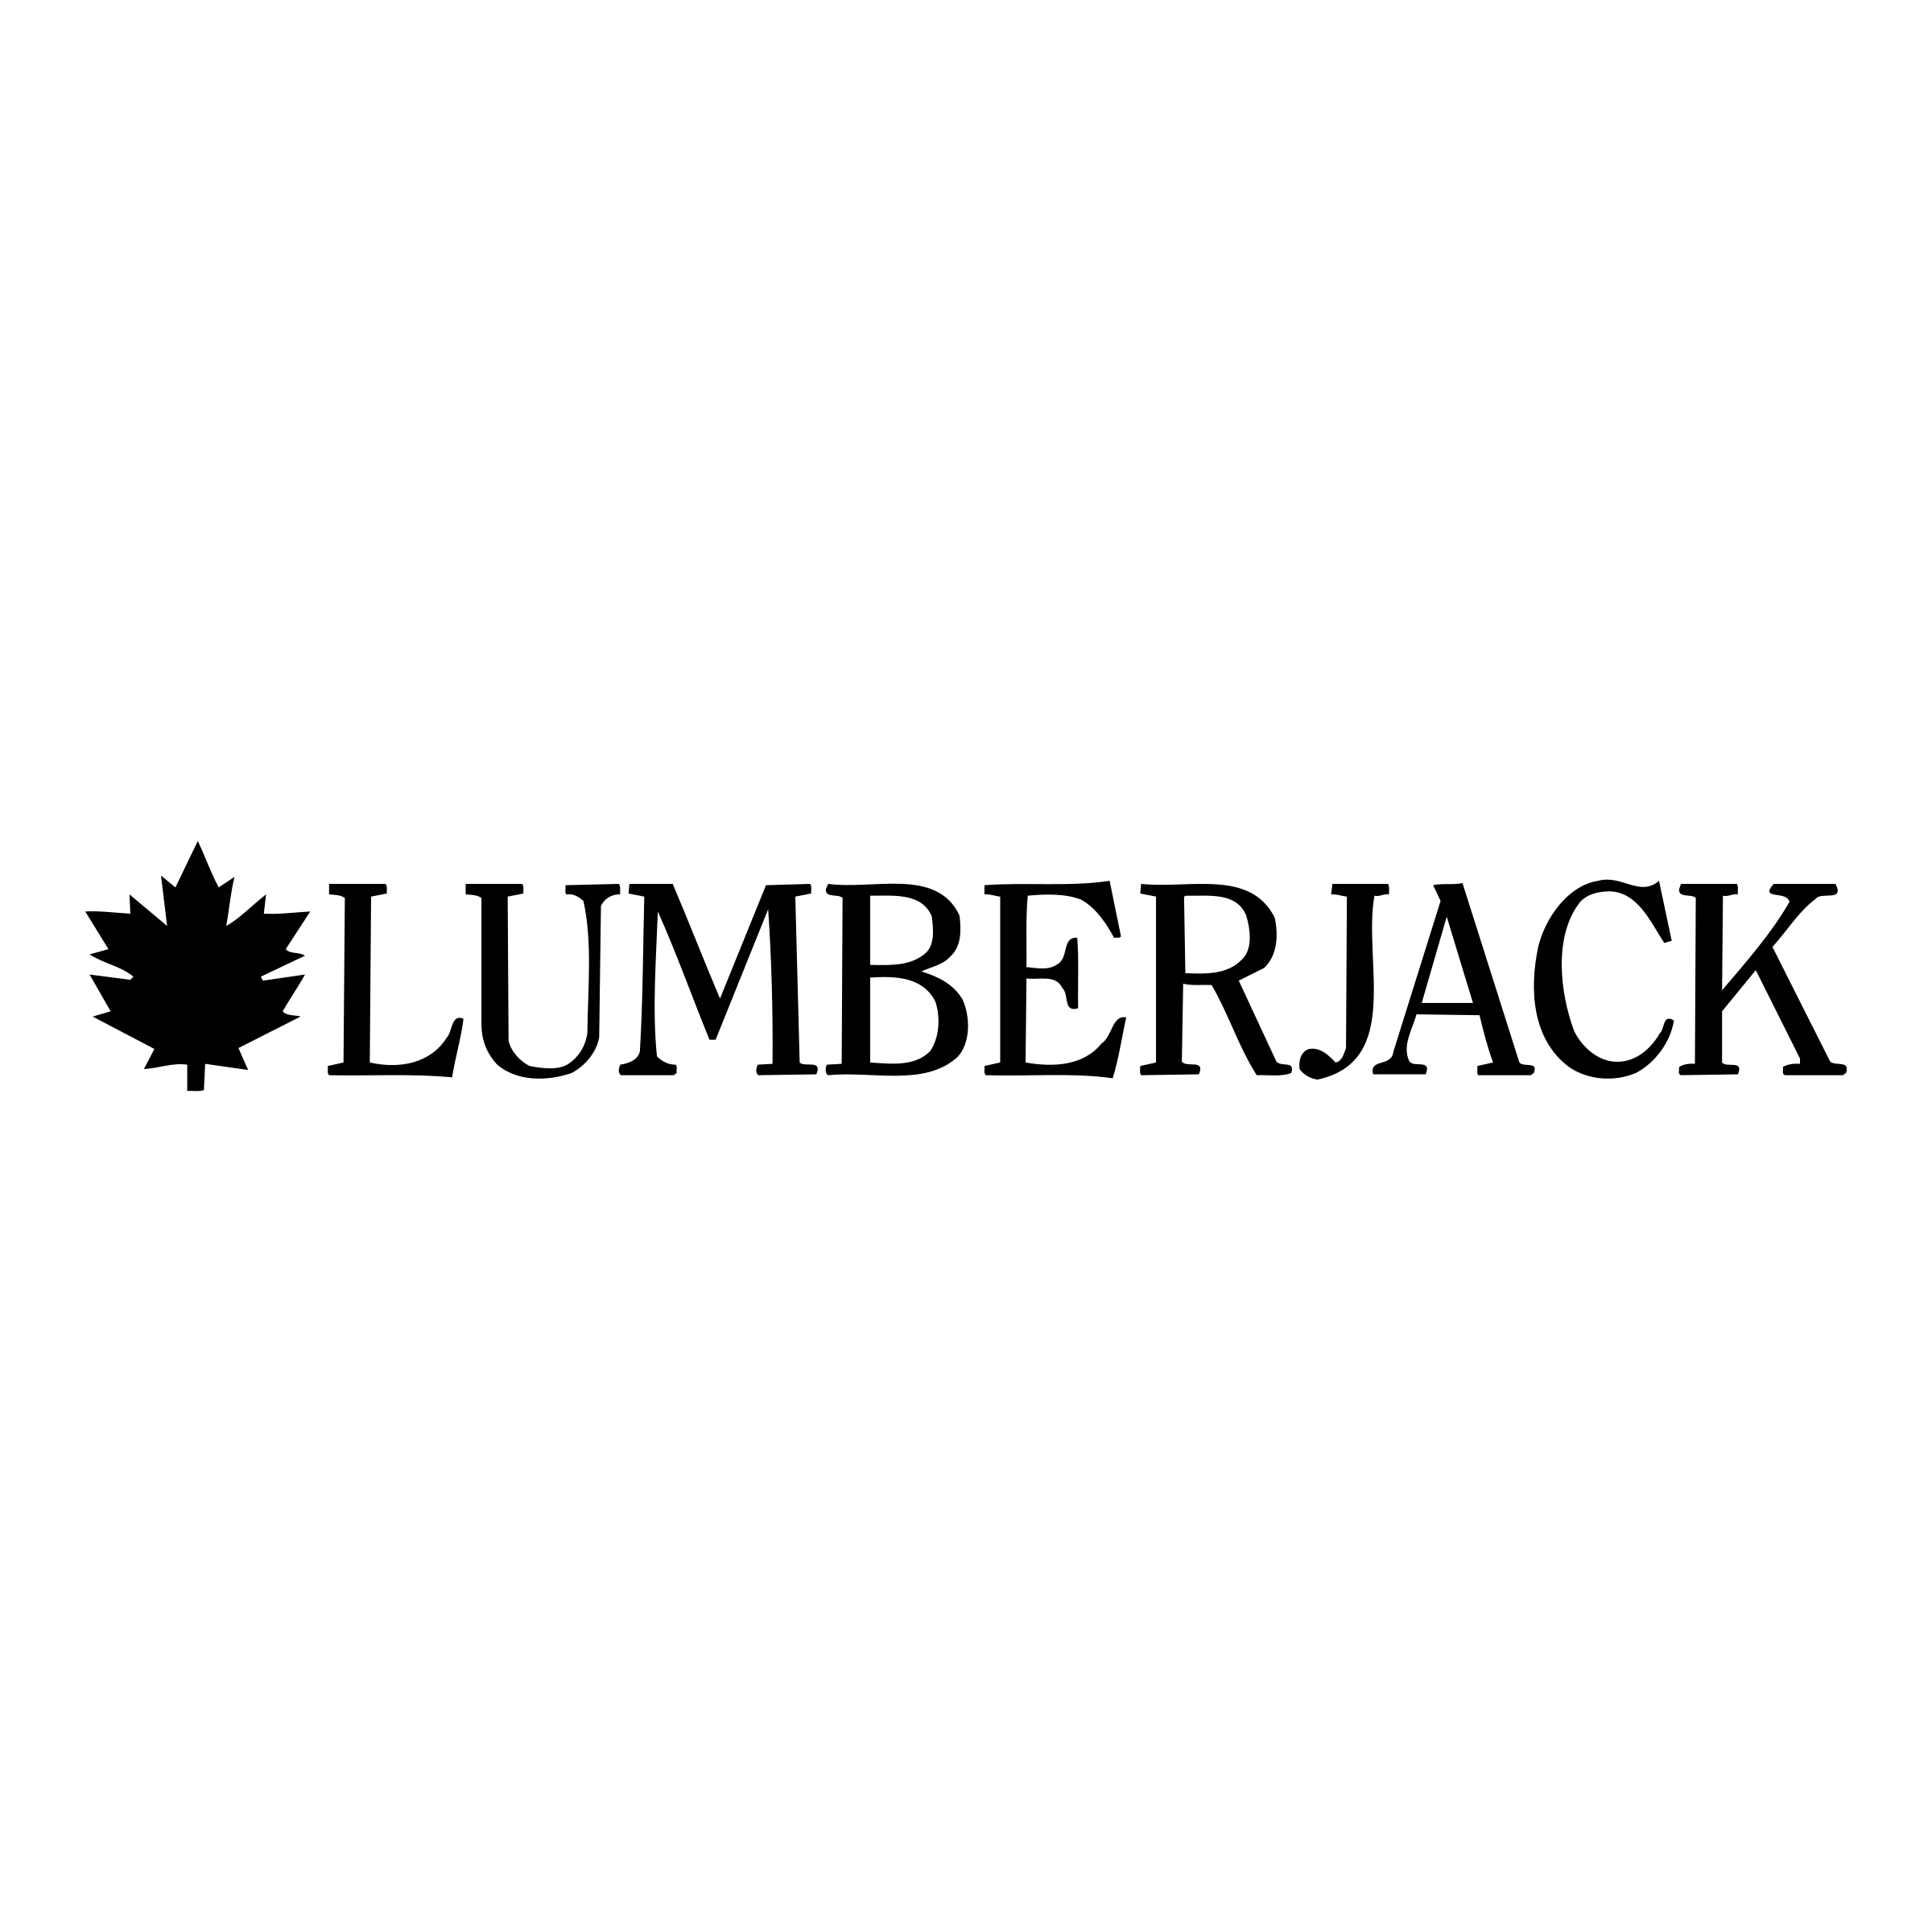 Lumberjack Logo - Lumberjack Logo PNG Transparent & SVG Vector - Freebie Supply